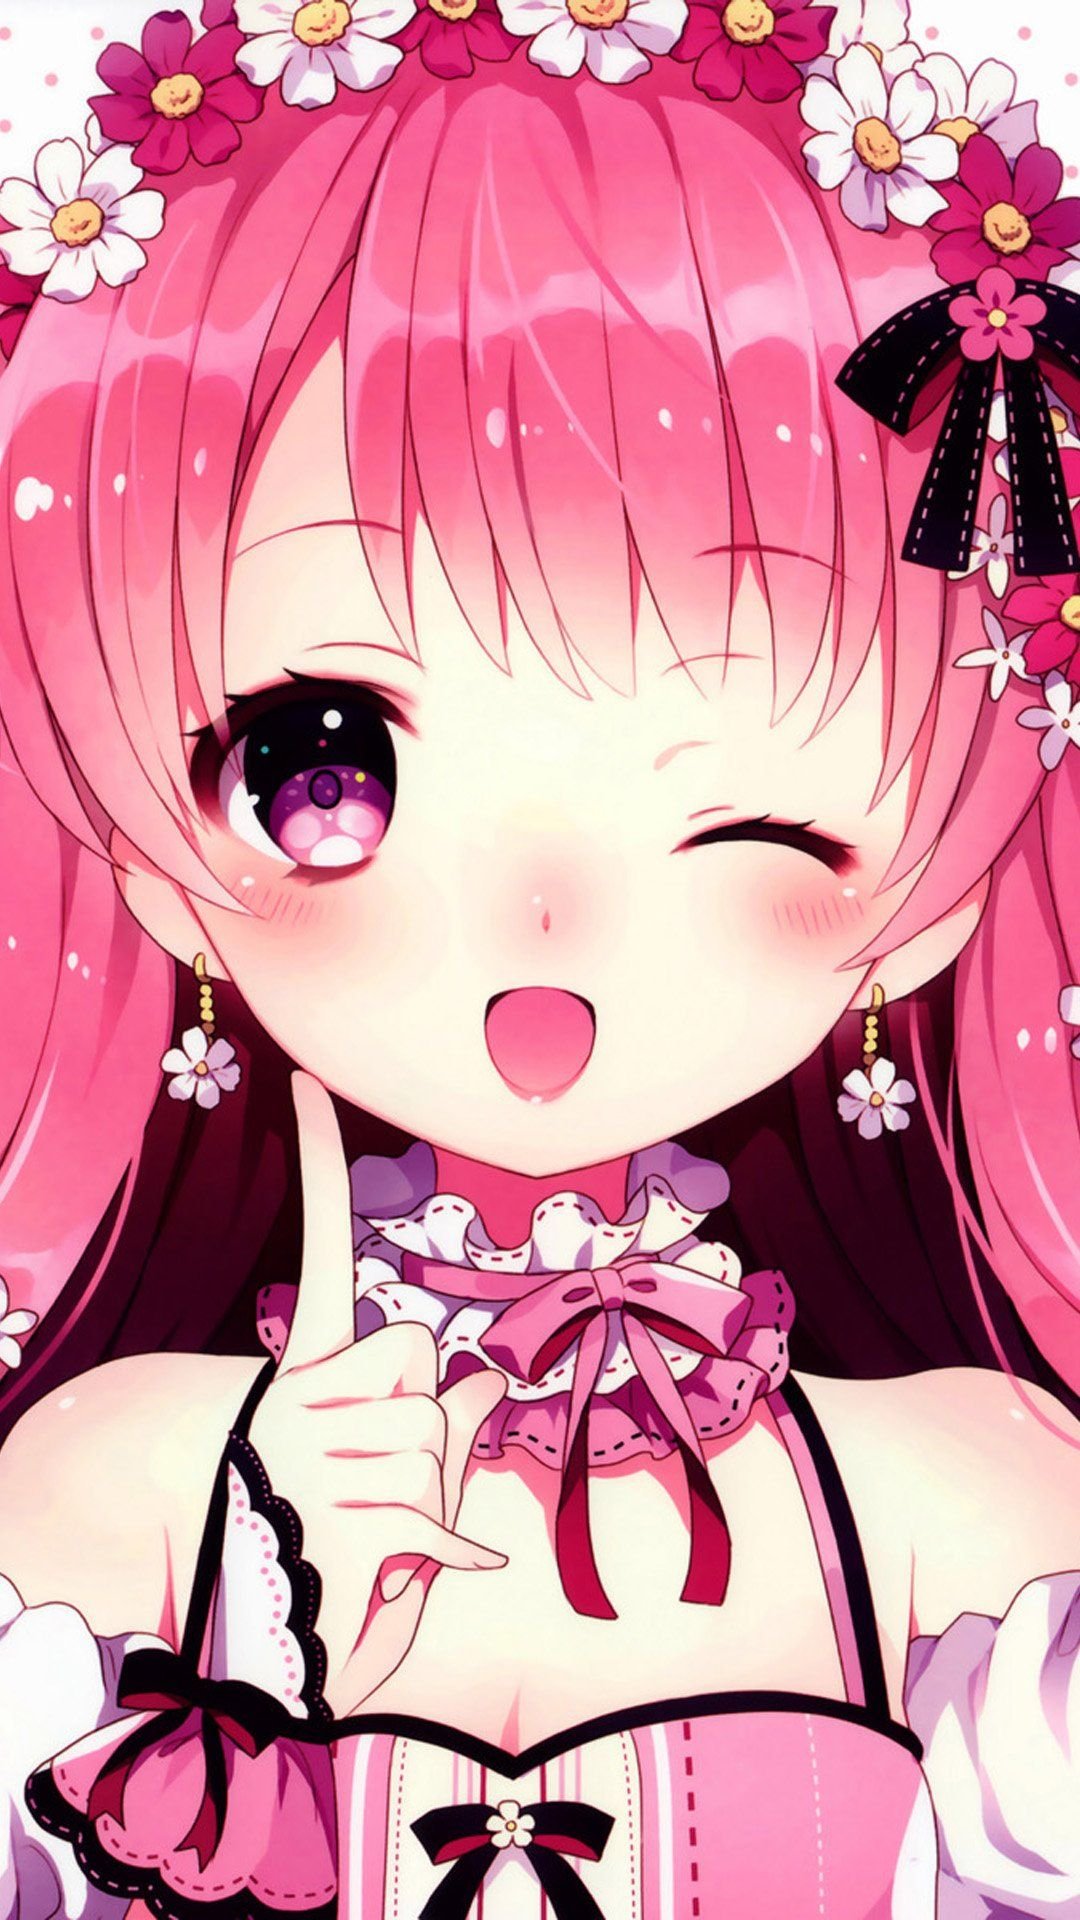 Lexica - Beautiful anime girl with a cute smile-demhanvico.com.vn